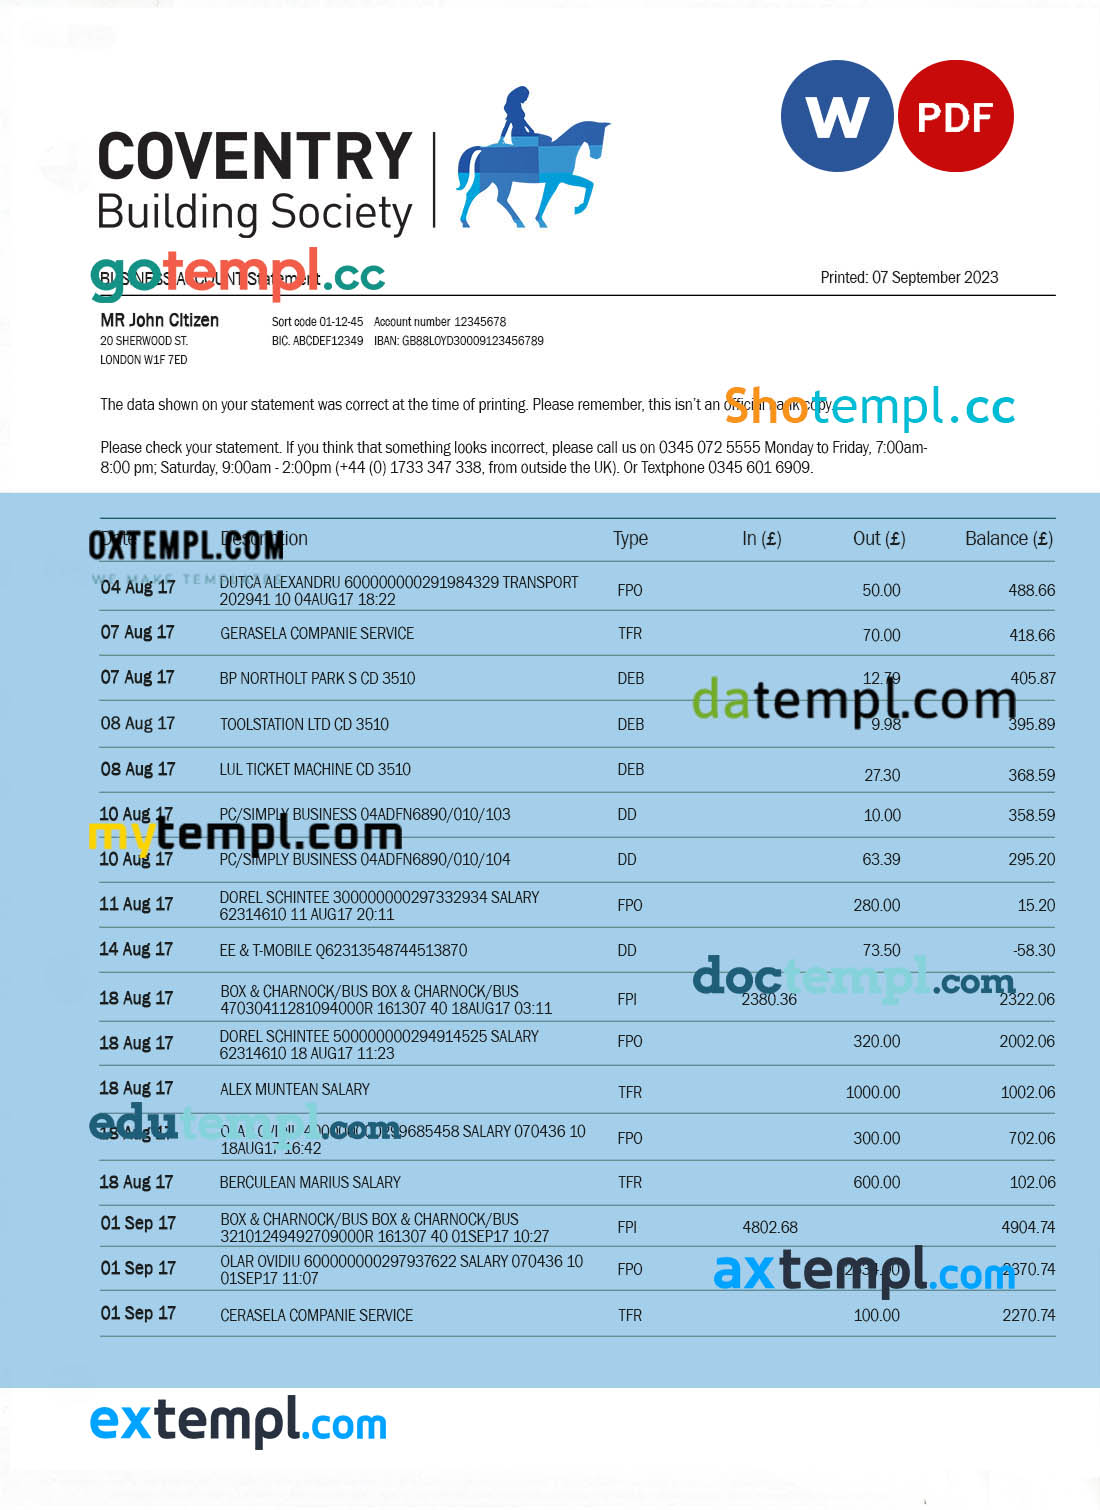 NEPAL DARAZ utility bill Word and PDF template